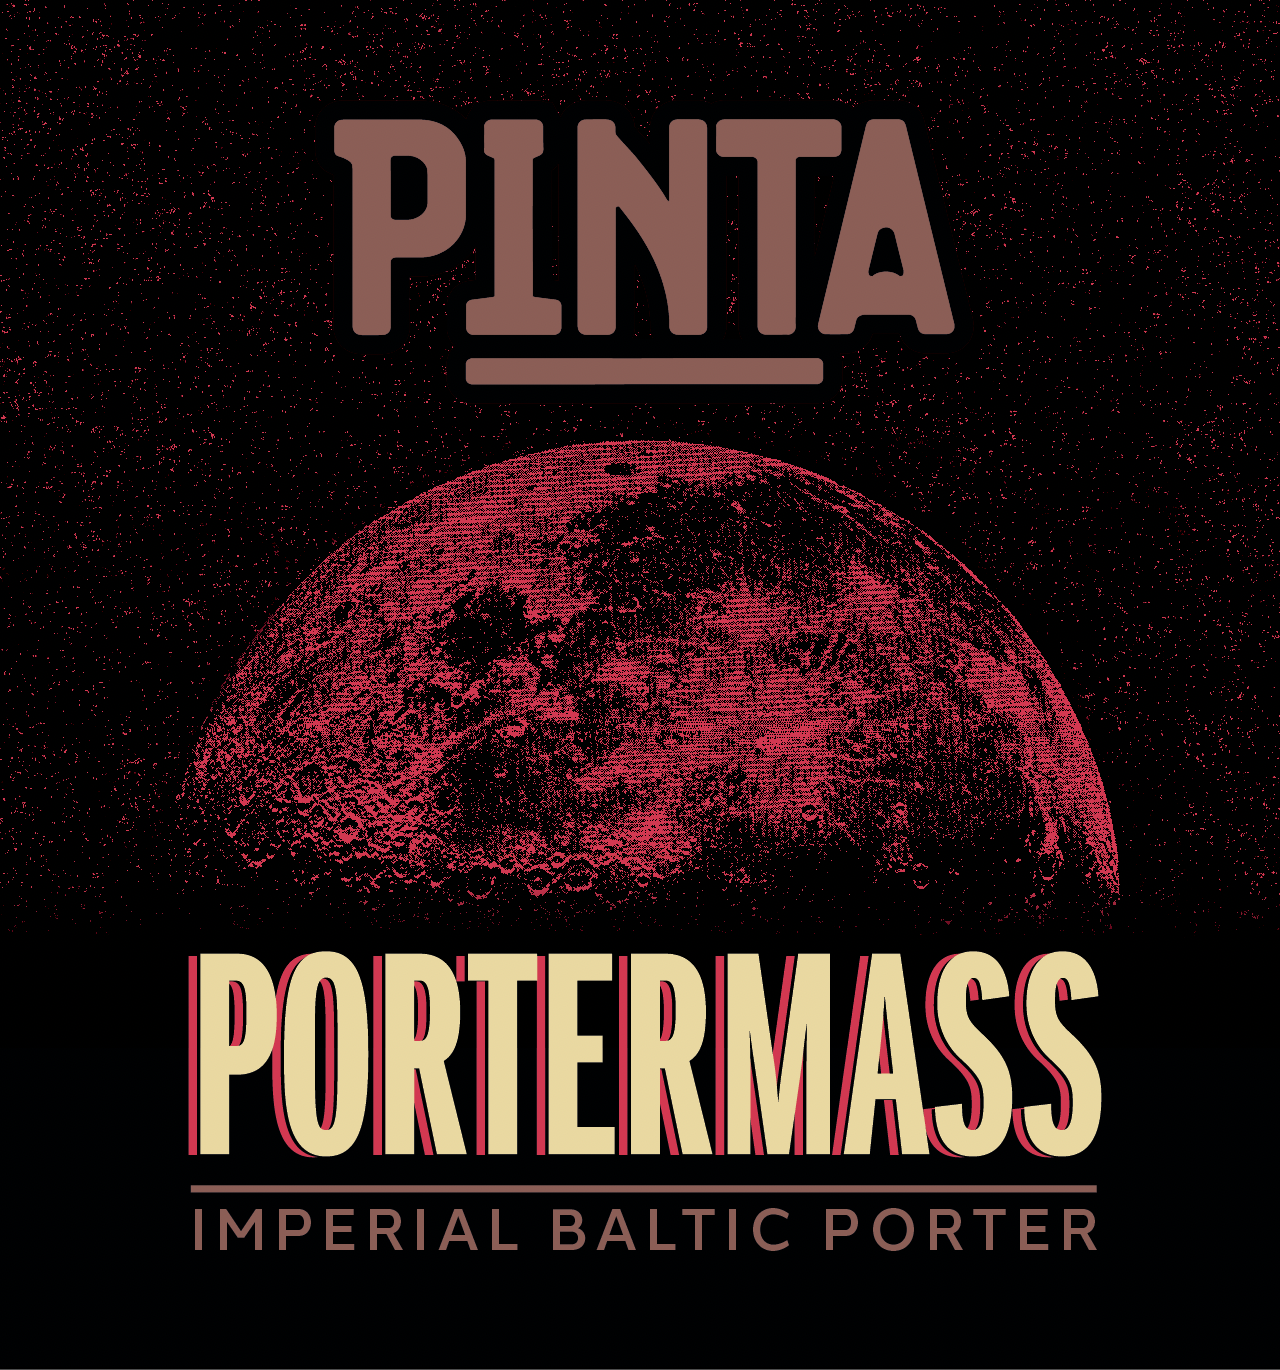 PINTA Portermass Imperial Baltic Porter